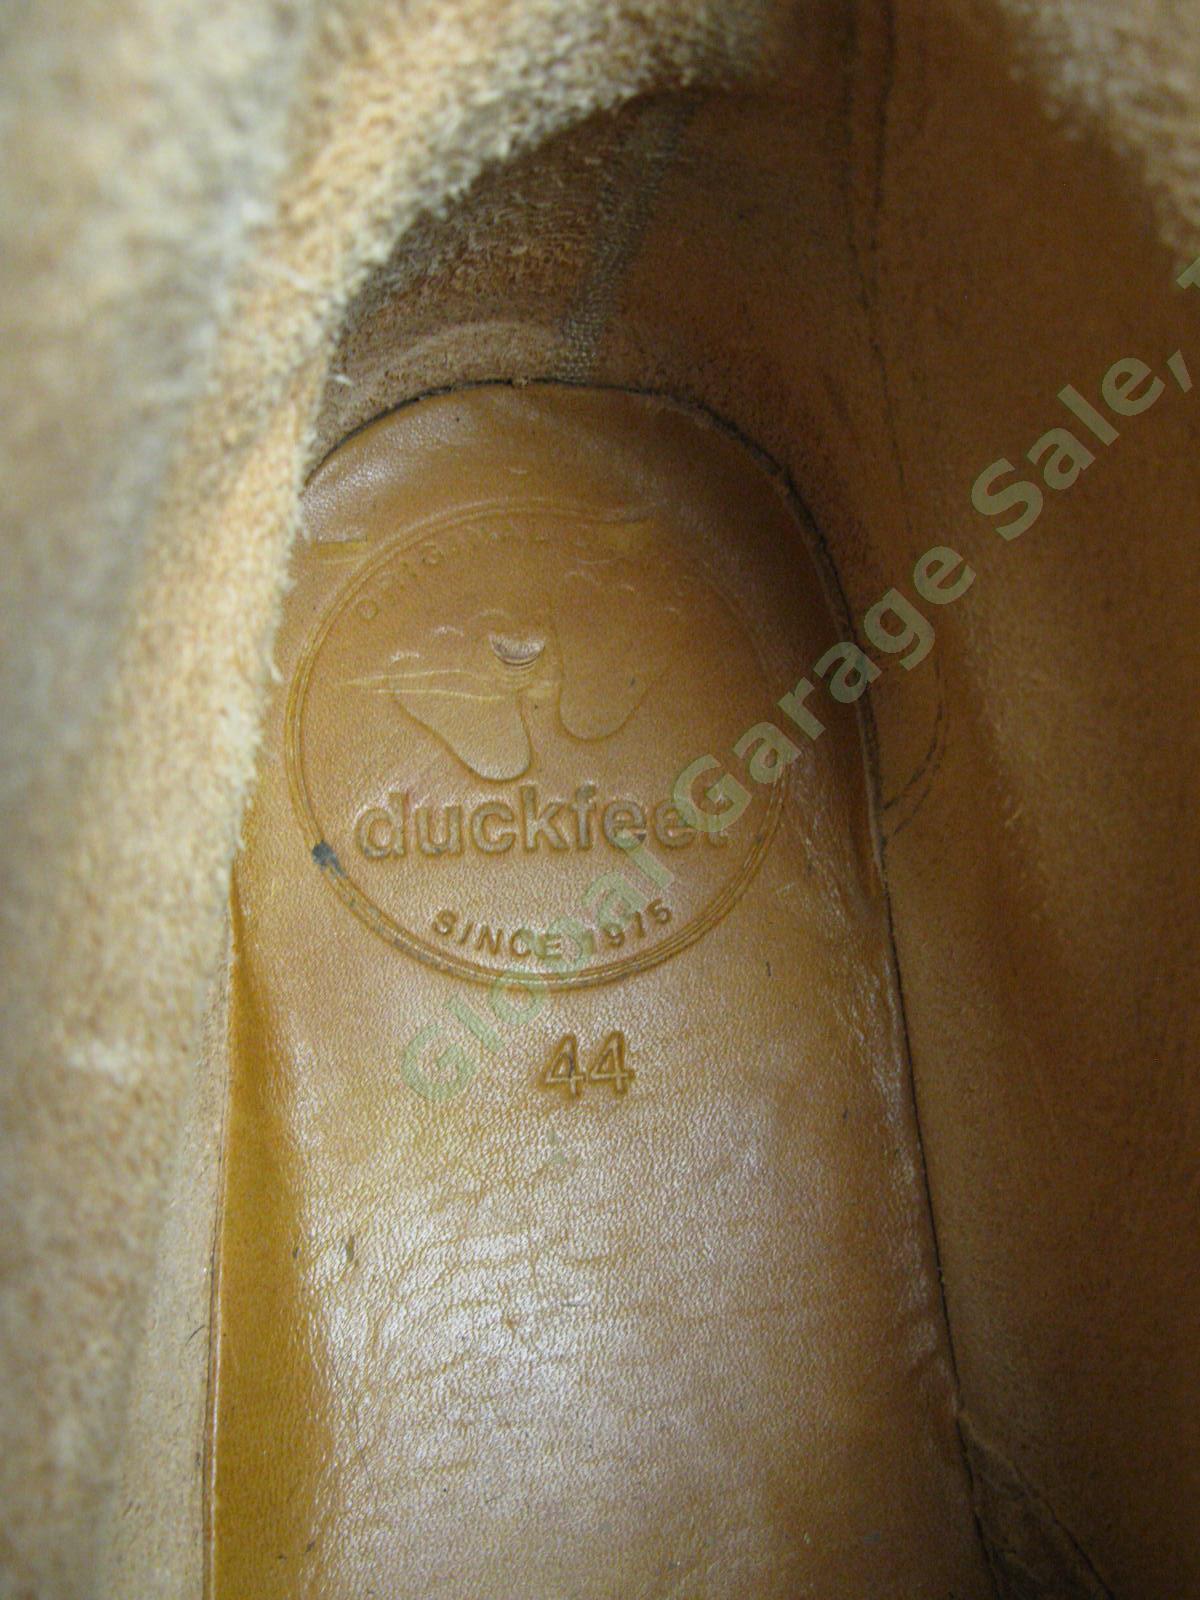 Original Danish Duckfeet Faborg EU 44 Bio Gold Brown Leather High Lace Up Boots 5